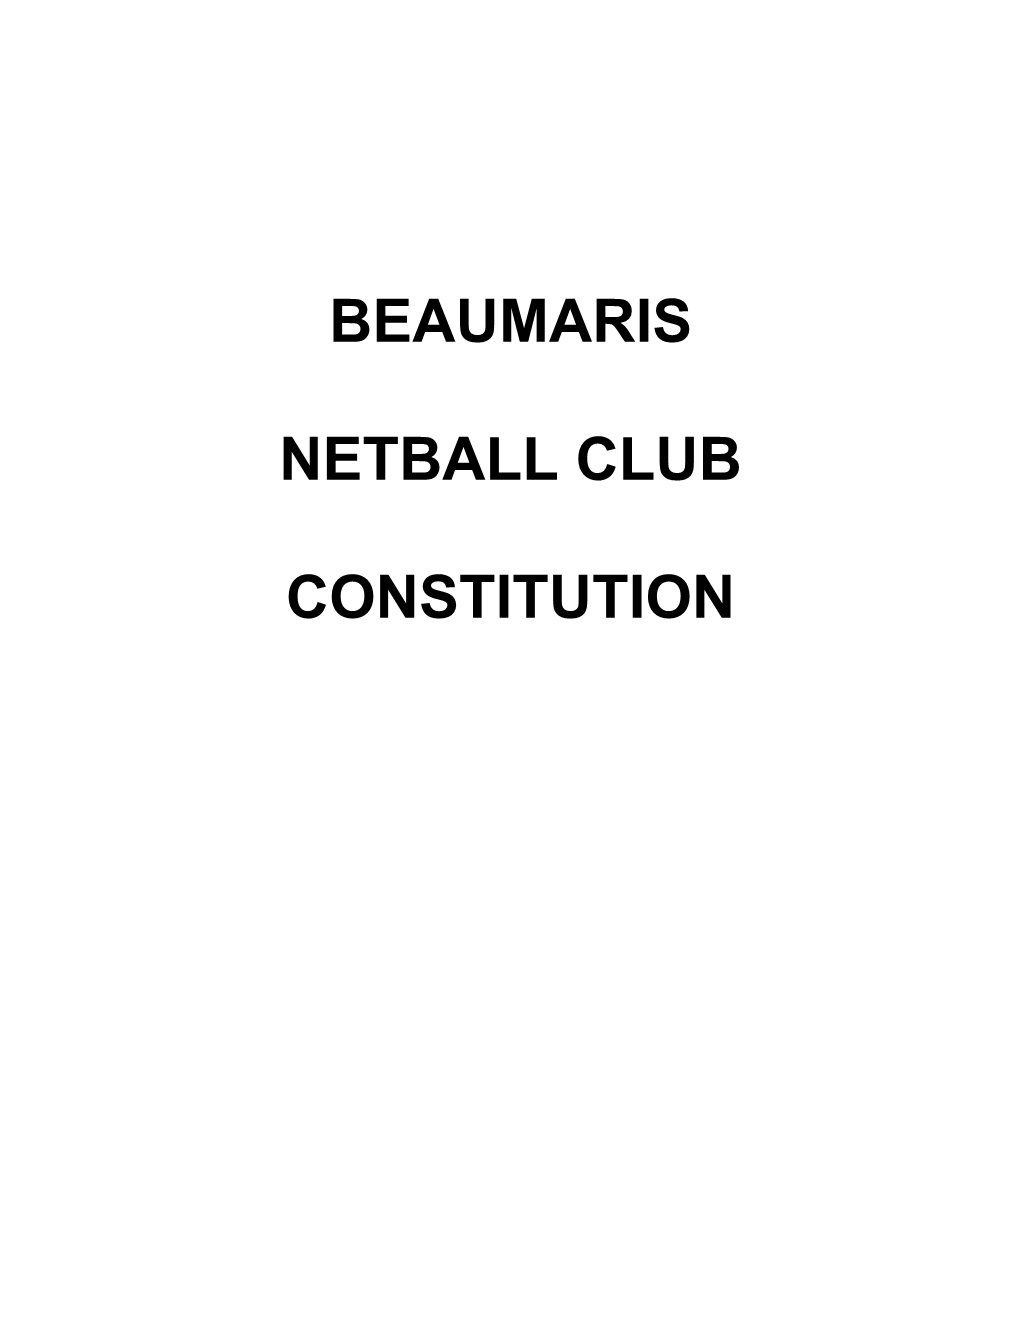 Constitution of the Beaumaris Netball Club